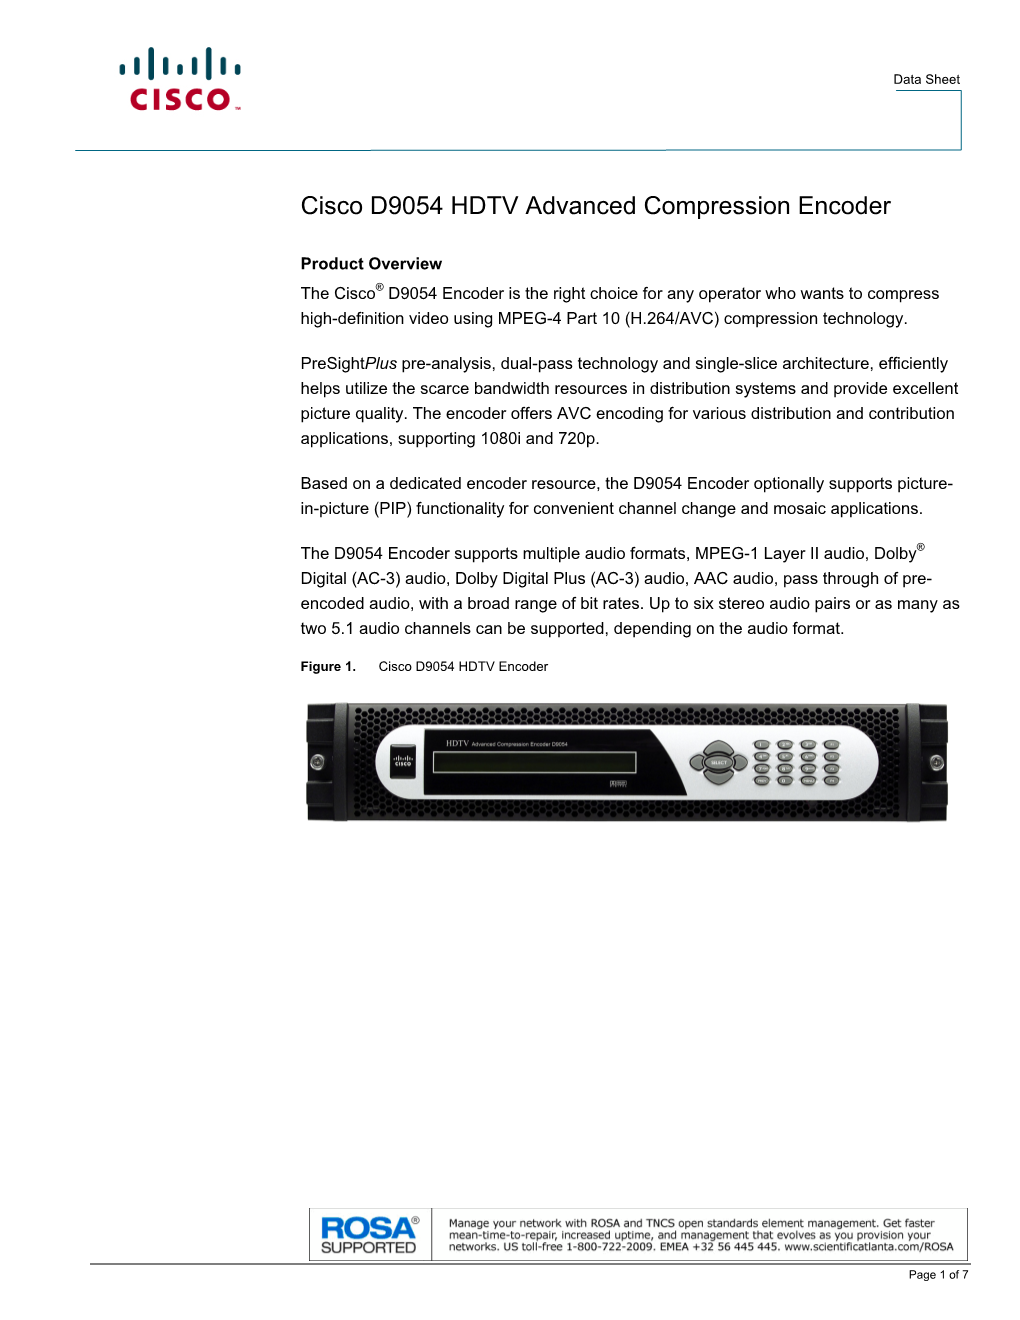 Data Sheet, Cisco D9054 HDTV Advanced Compression Encoder